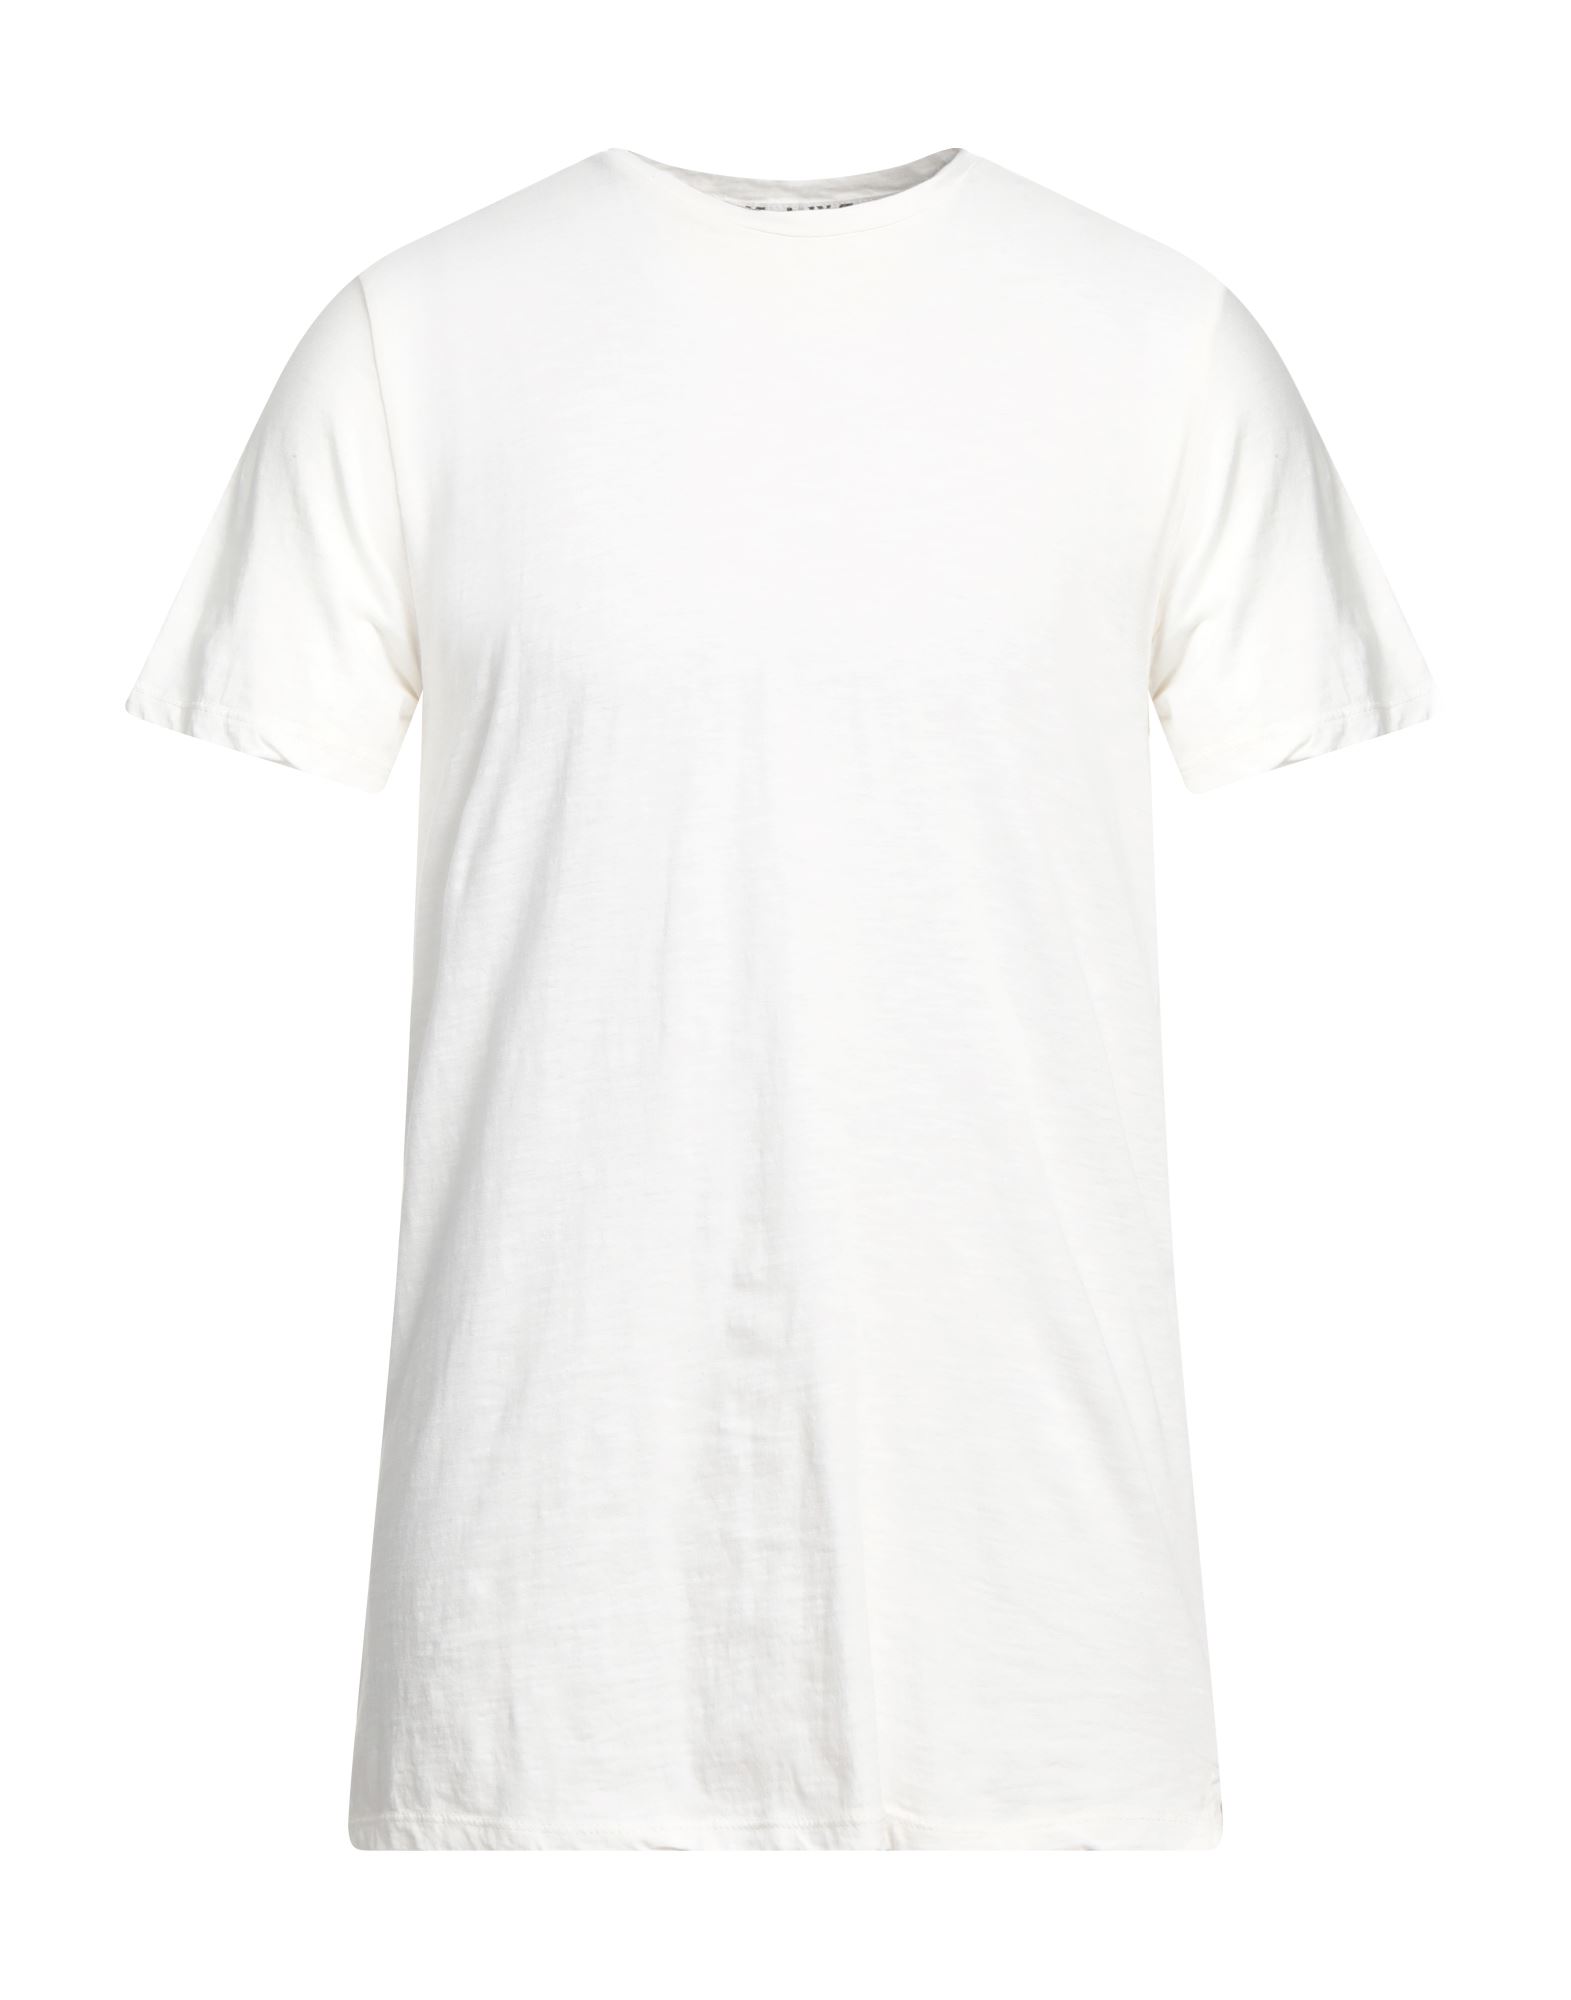 BERNA T-shirts Herren Weiß von BERNA